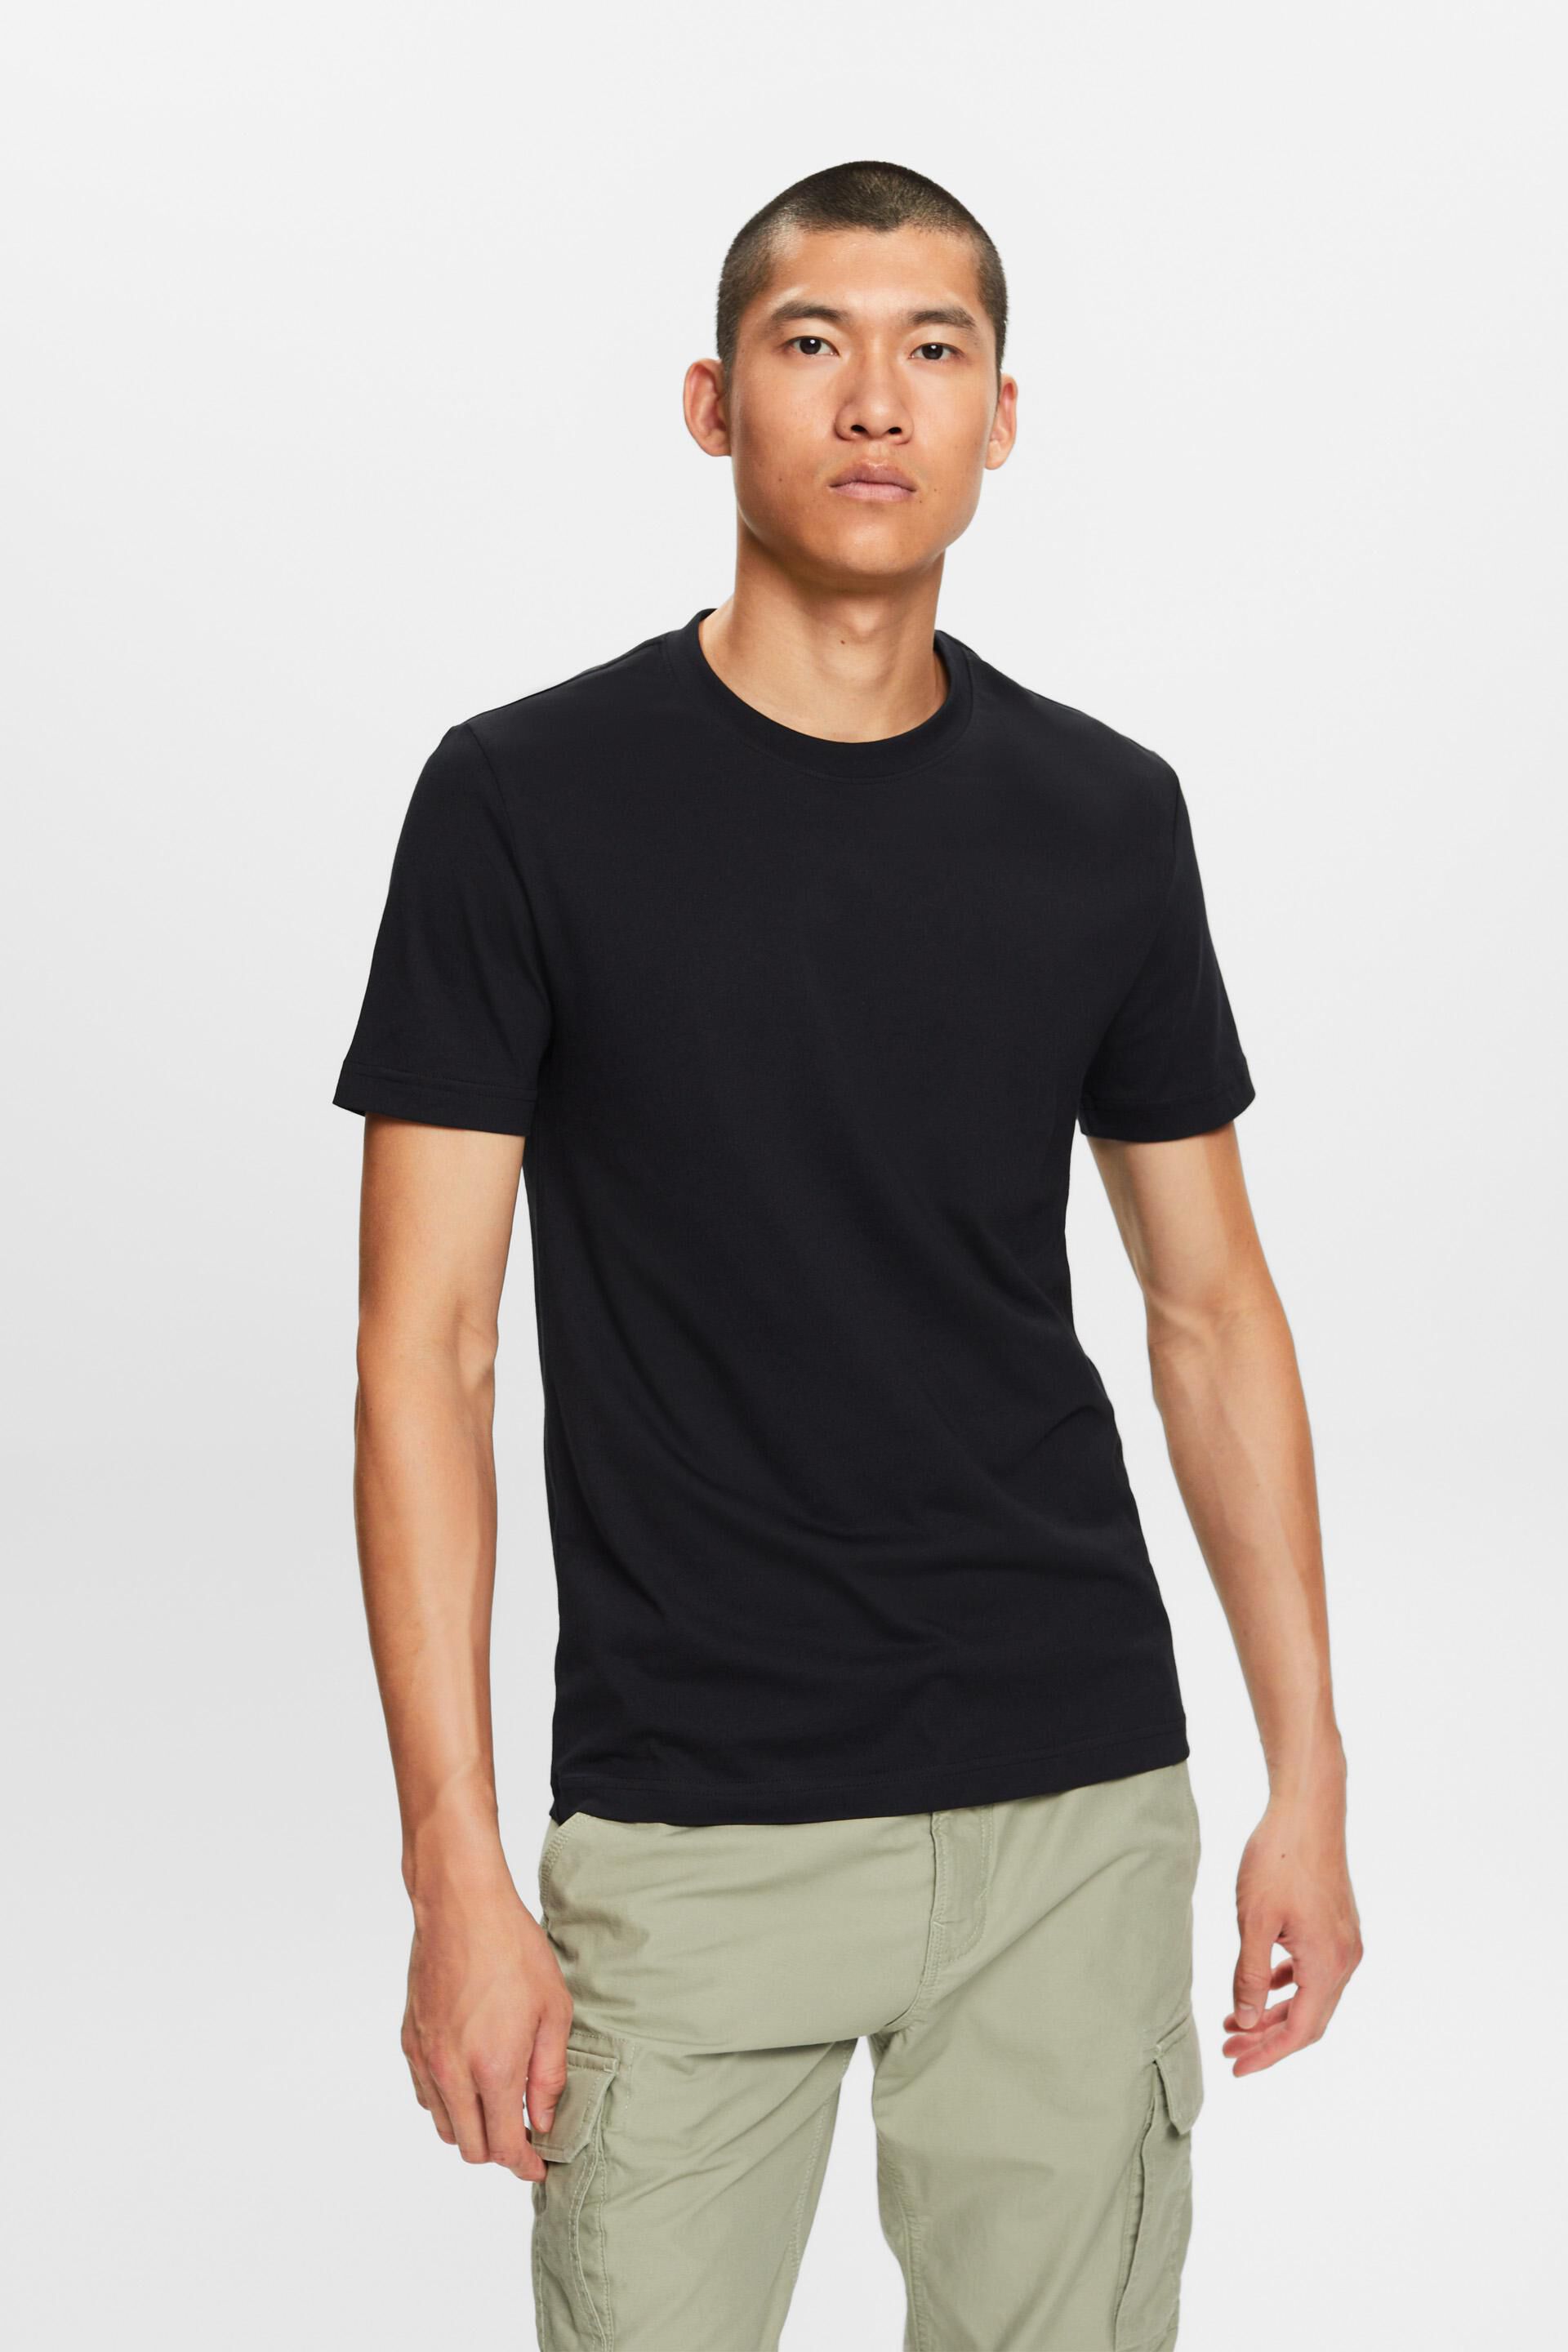 Esprit cotton 100% Jersey t-shirt, crewneck